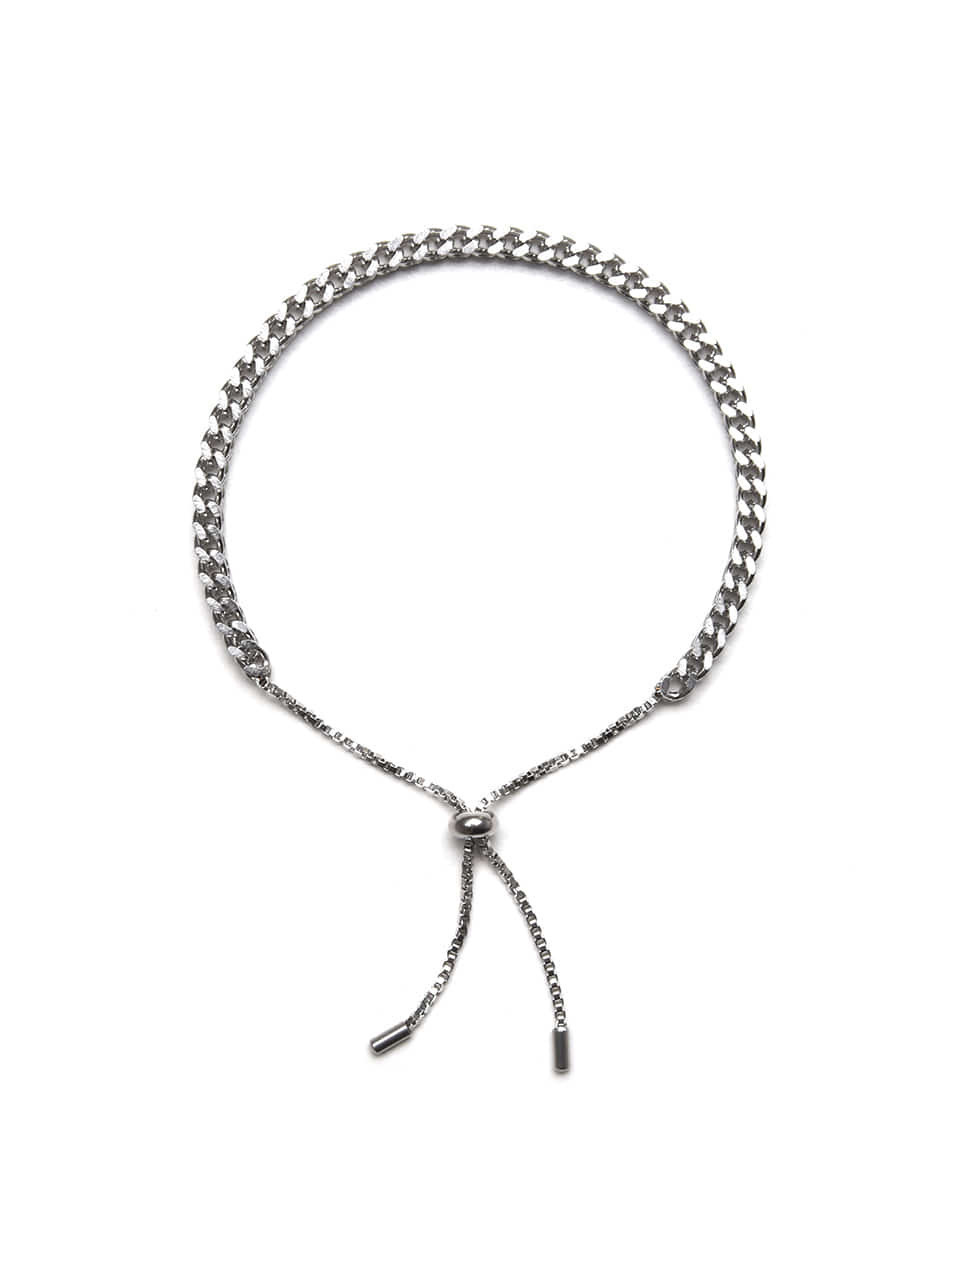 BA019 [Surgical steel] Adjustable chain bracelet